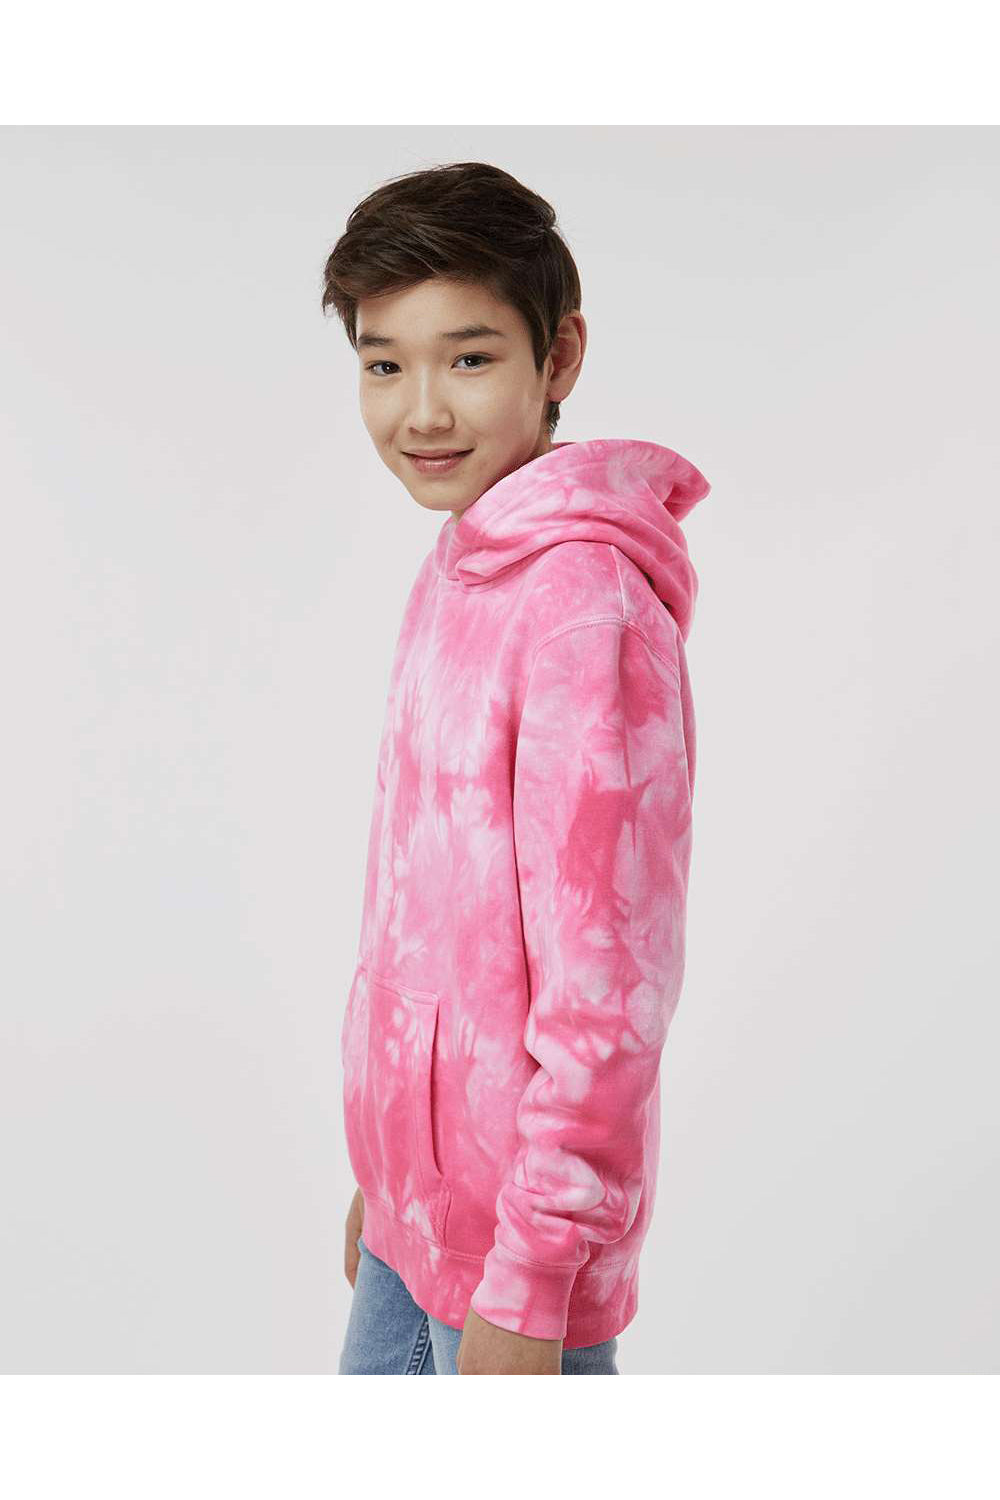 Independent Trading Co. PRM1500TD Youth Tie-Dye Hooded Sweatshirt Hoodie Pink Model Side